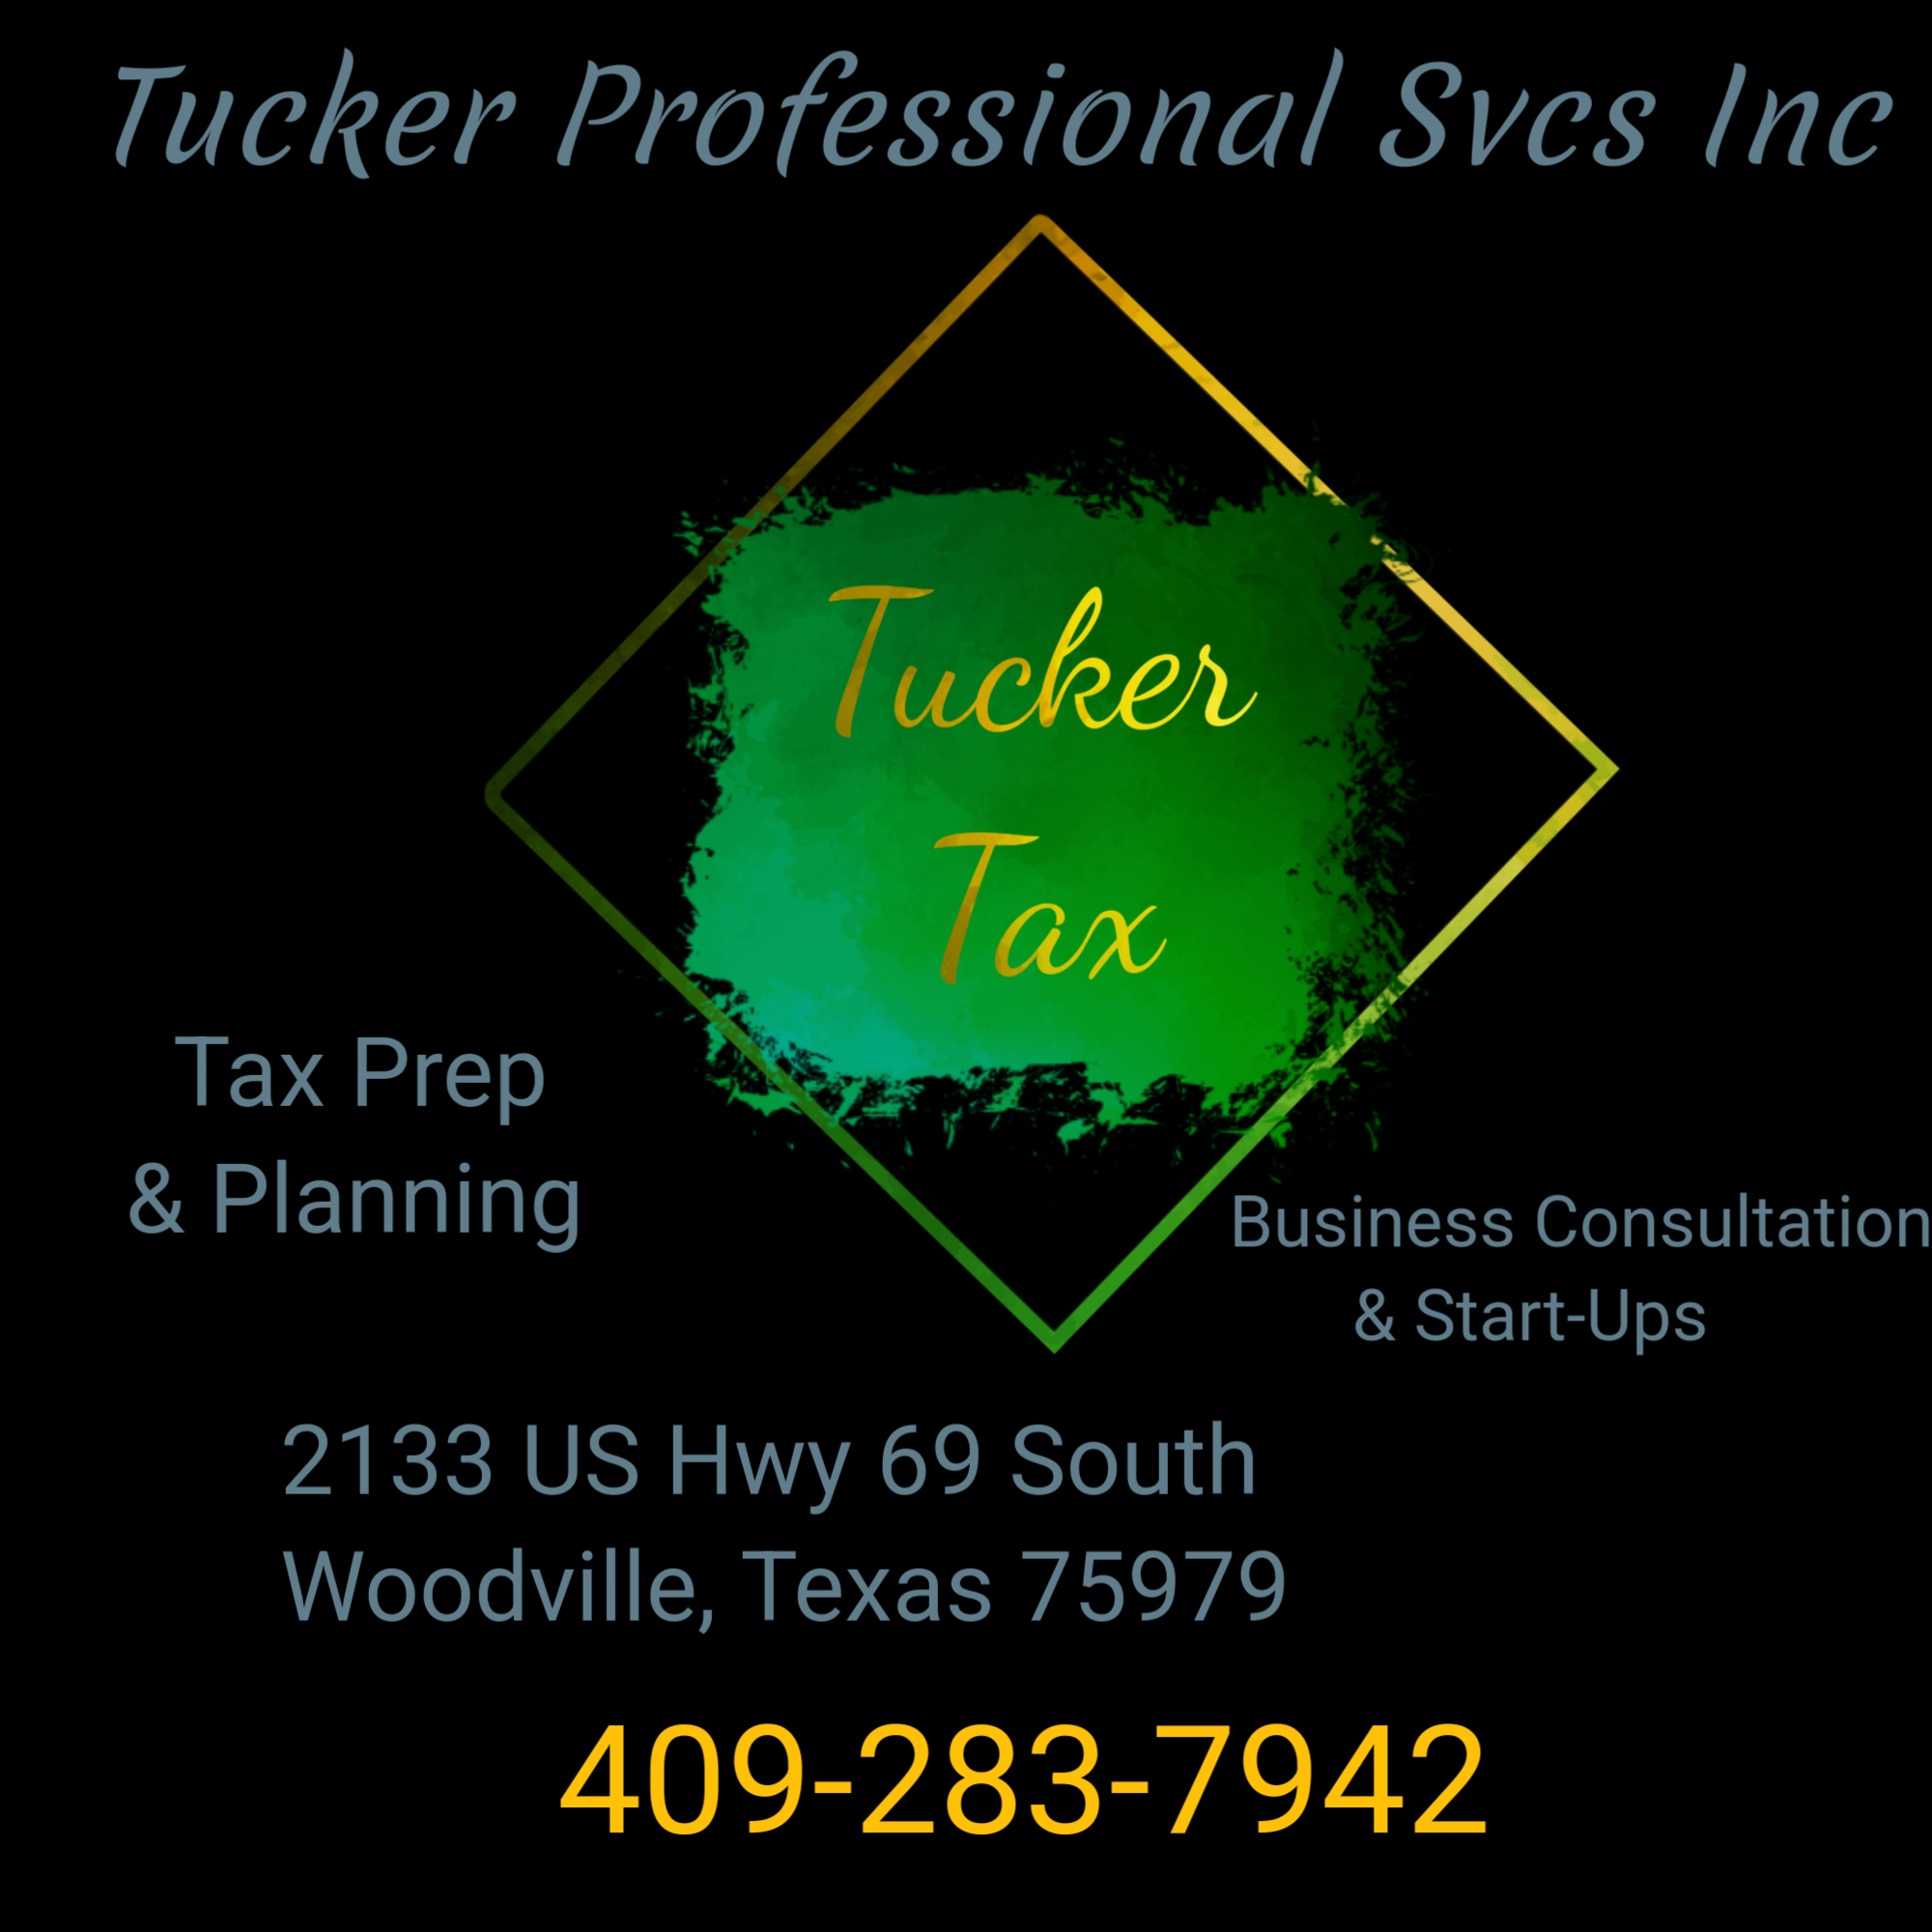 Tucker Professional Svcs Inc 2133 US-69 South, Woodville Texas 75979